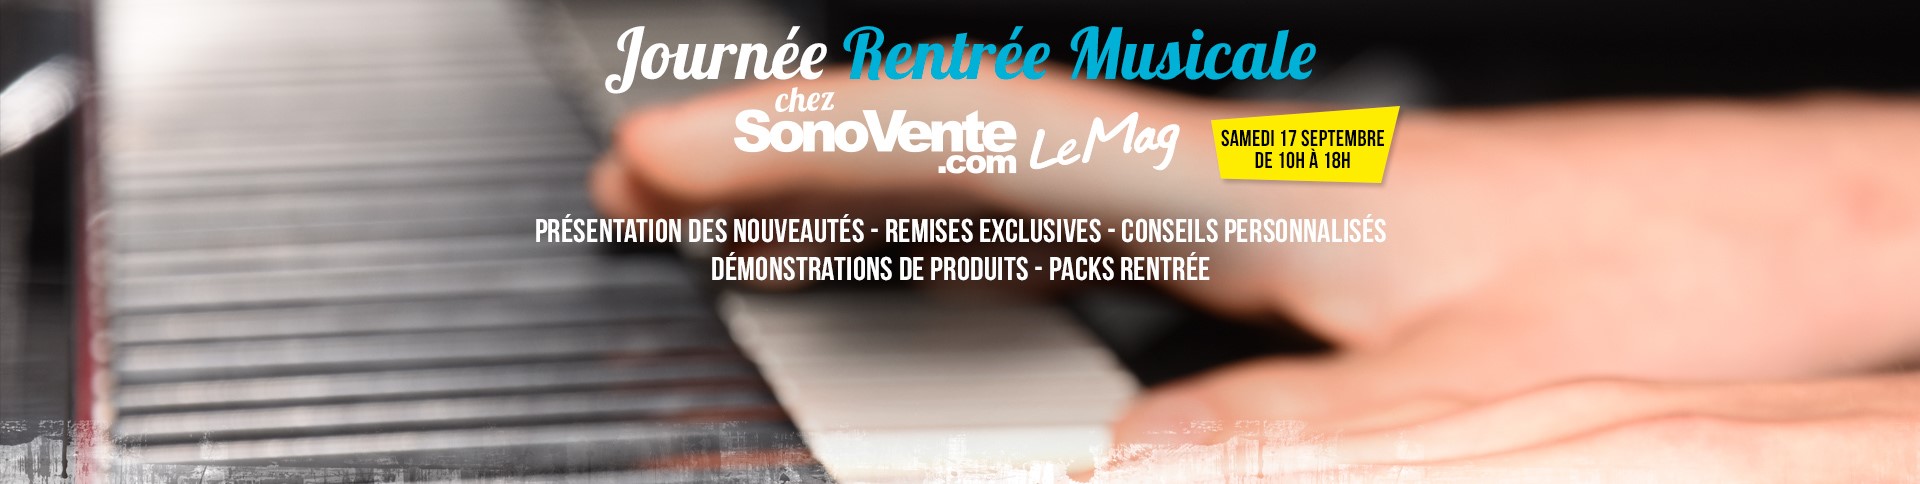 Journee rentree musicale SonoVente.com Le Mag